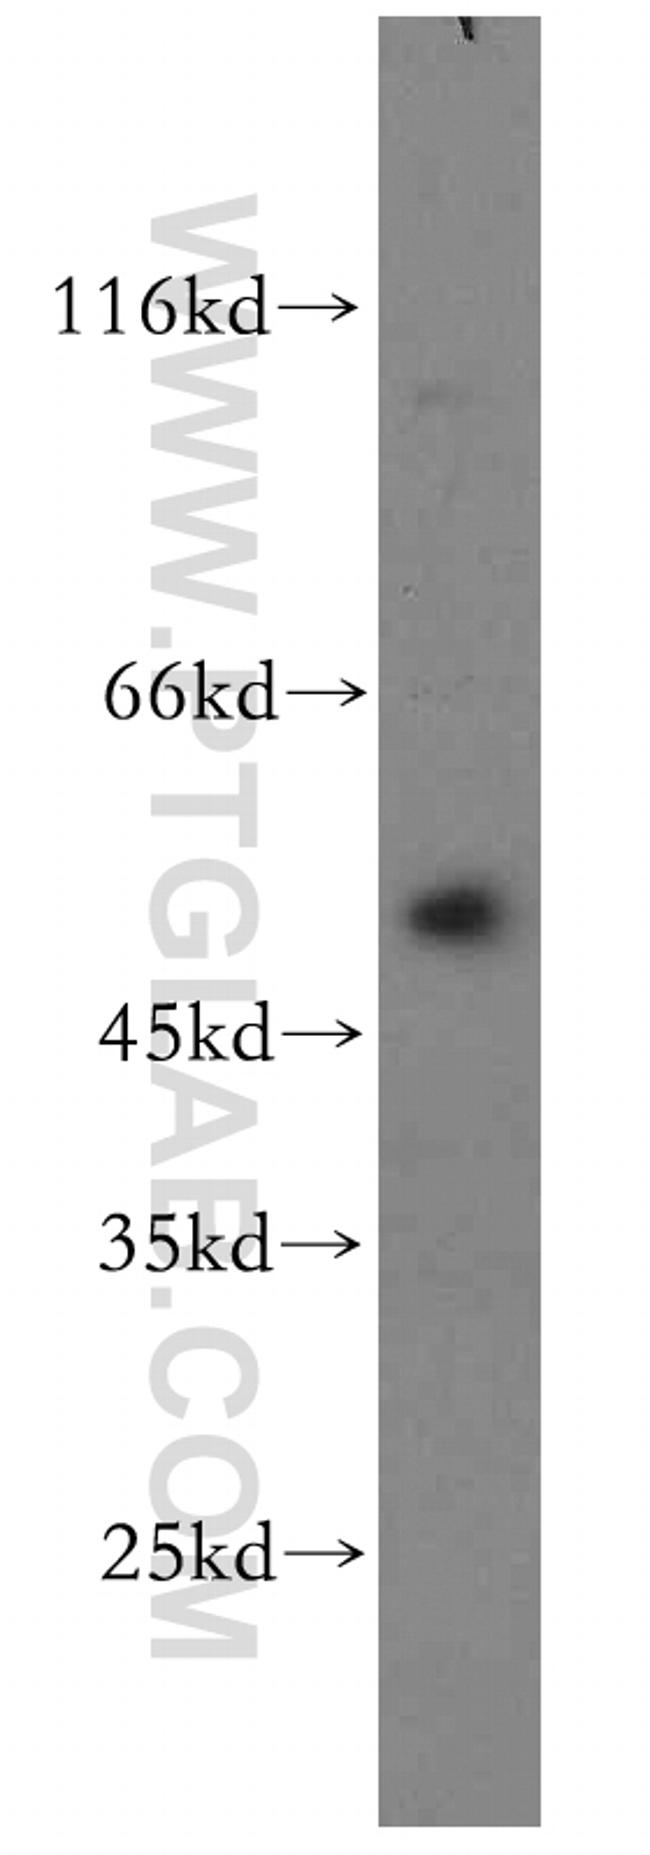 YBX1 Antibody in Western Blot (WB)